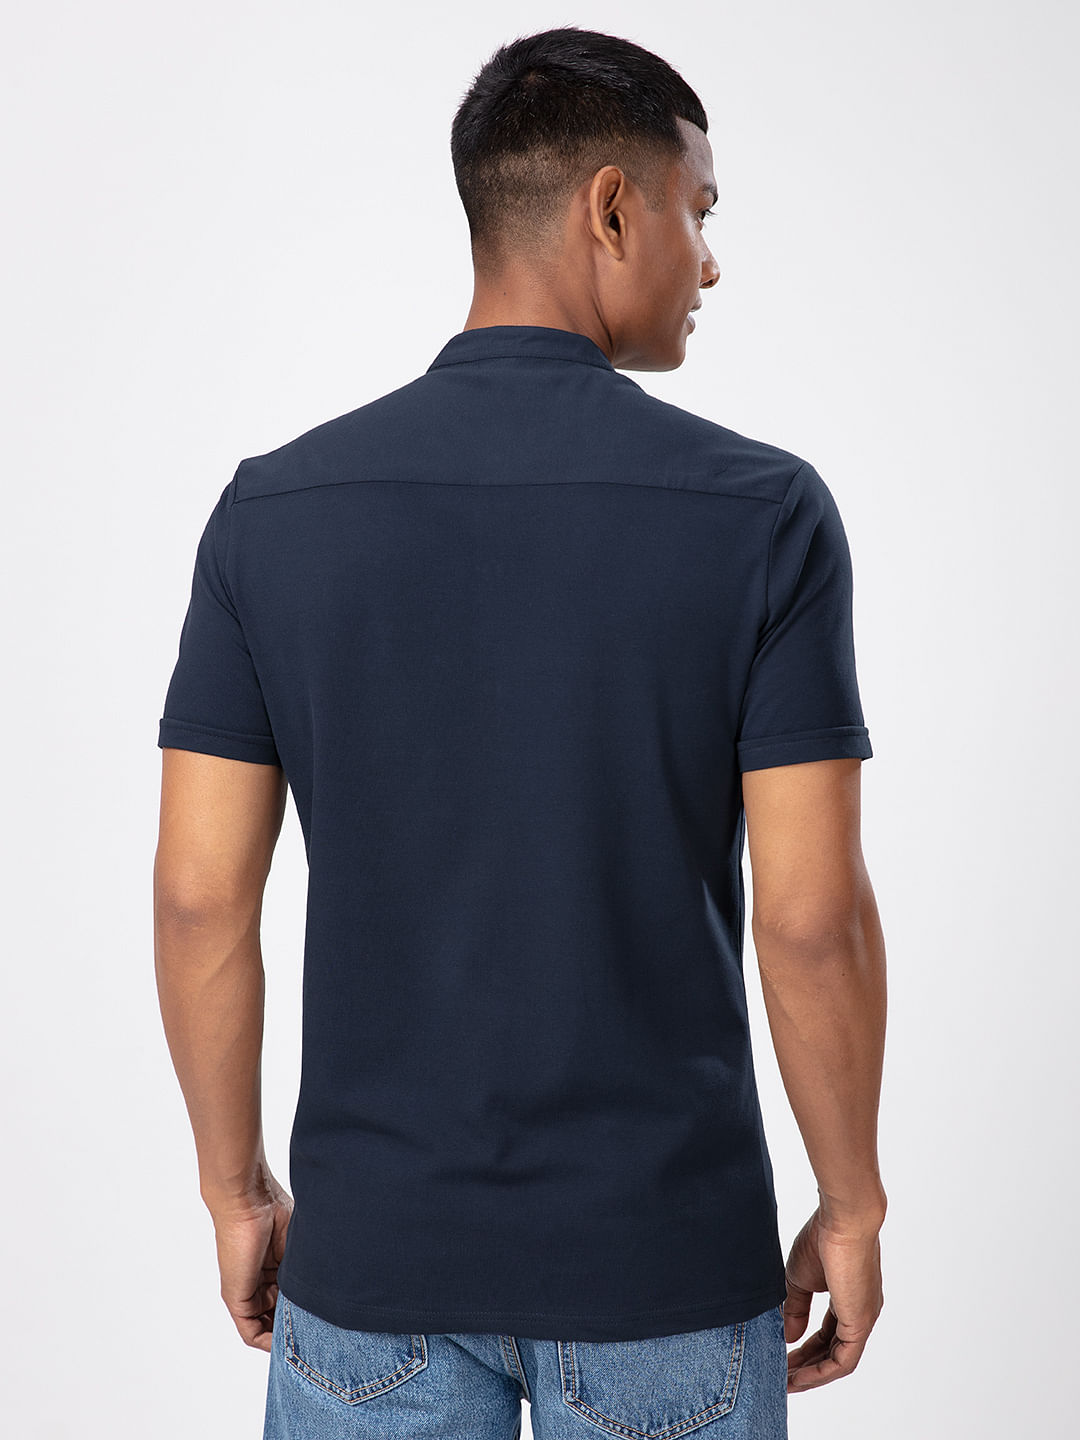 Buy Solids Mandarin Knit Shirt Navy Blue Shirts Online